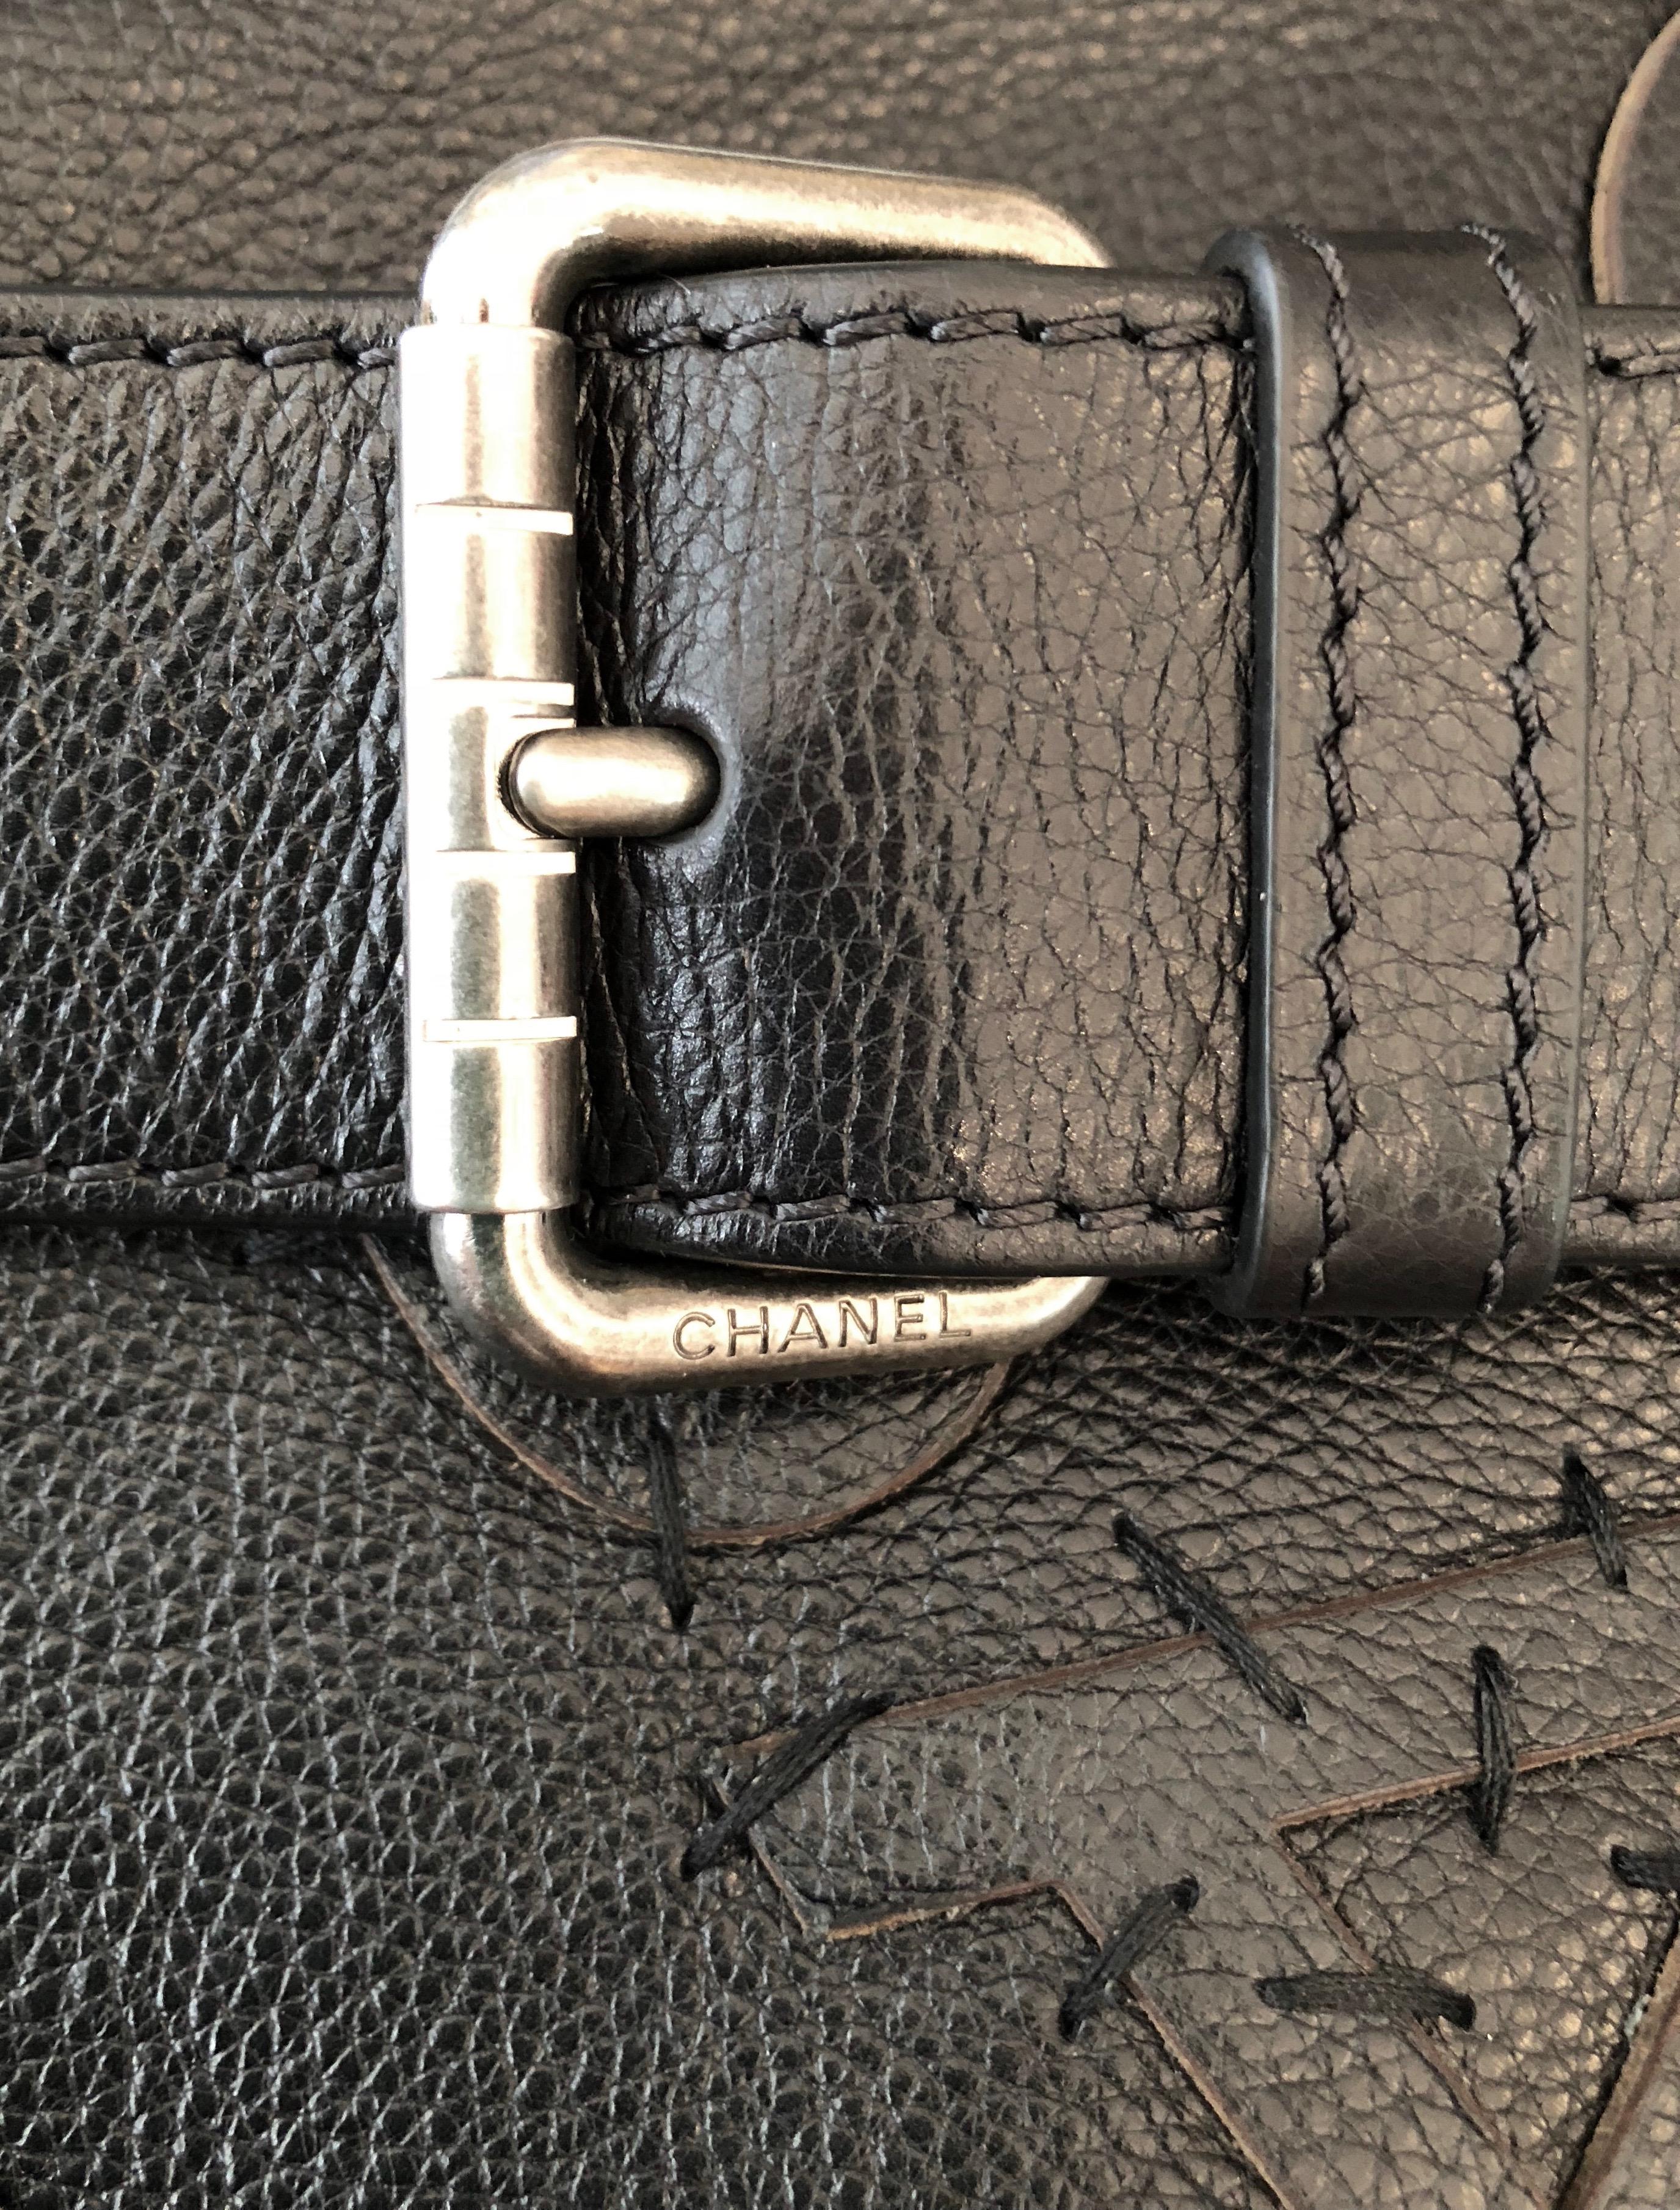 Chanel 5 x 5 CC Black Smooth Leather Satchel Bag 2